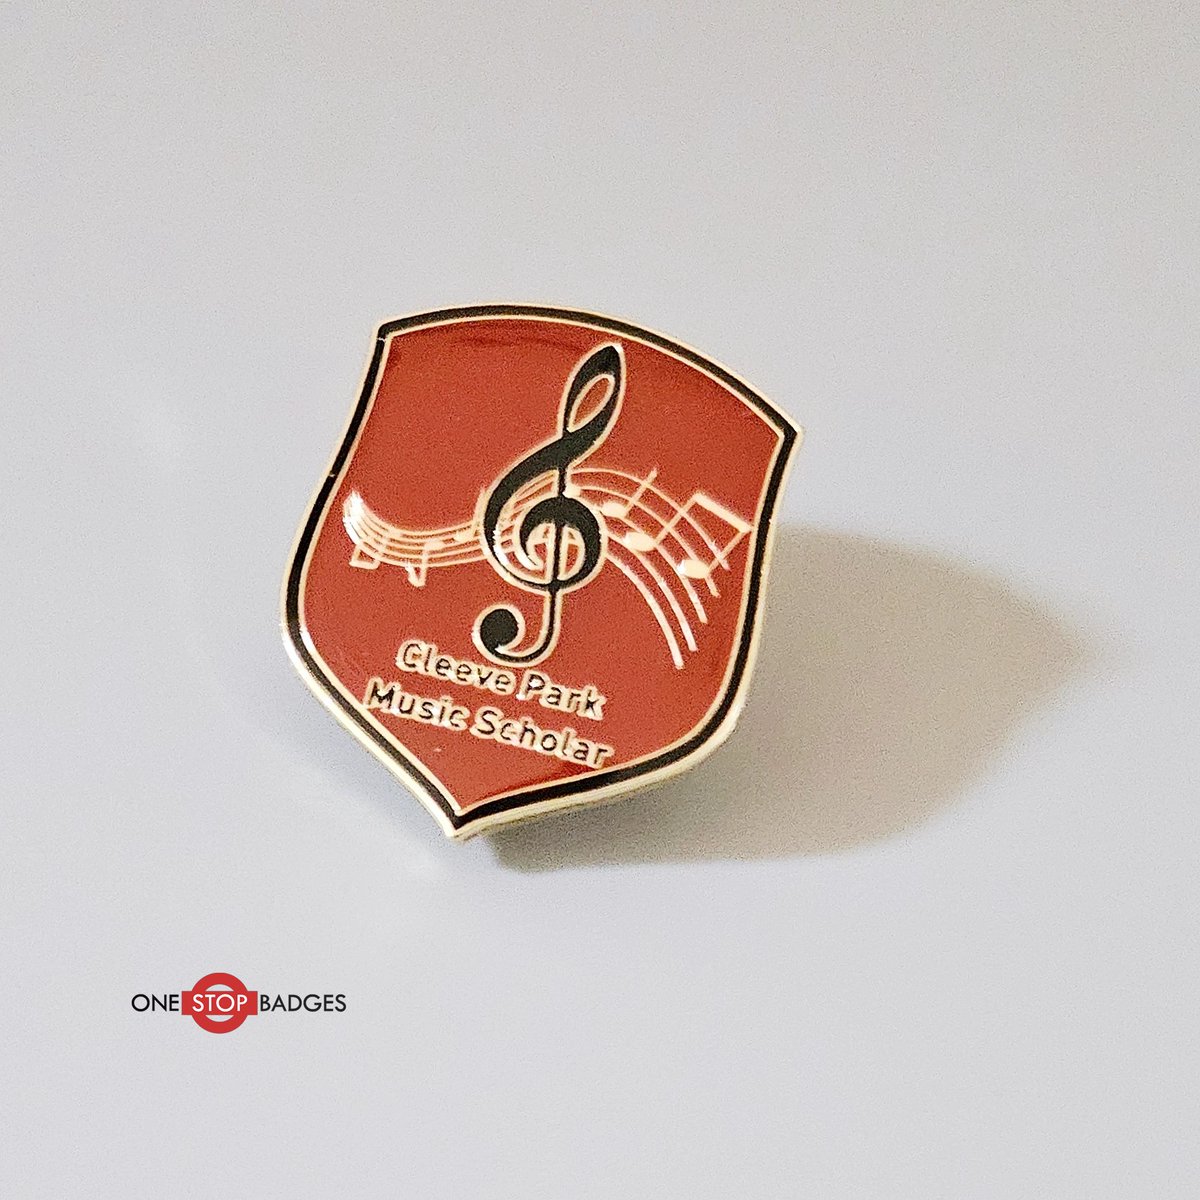 🎼 Soft Enamel Badges 🎼

#pinbadges #pins #badges #enamelpins #enamelbadges #pindesign #custompins #pinaddict #pincommunity #pinworld #enamelpinbadges #pinlove #lapelpins #custombadges #personalisedpins #musicscholarship #music #scholar